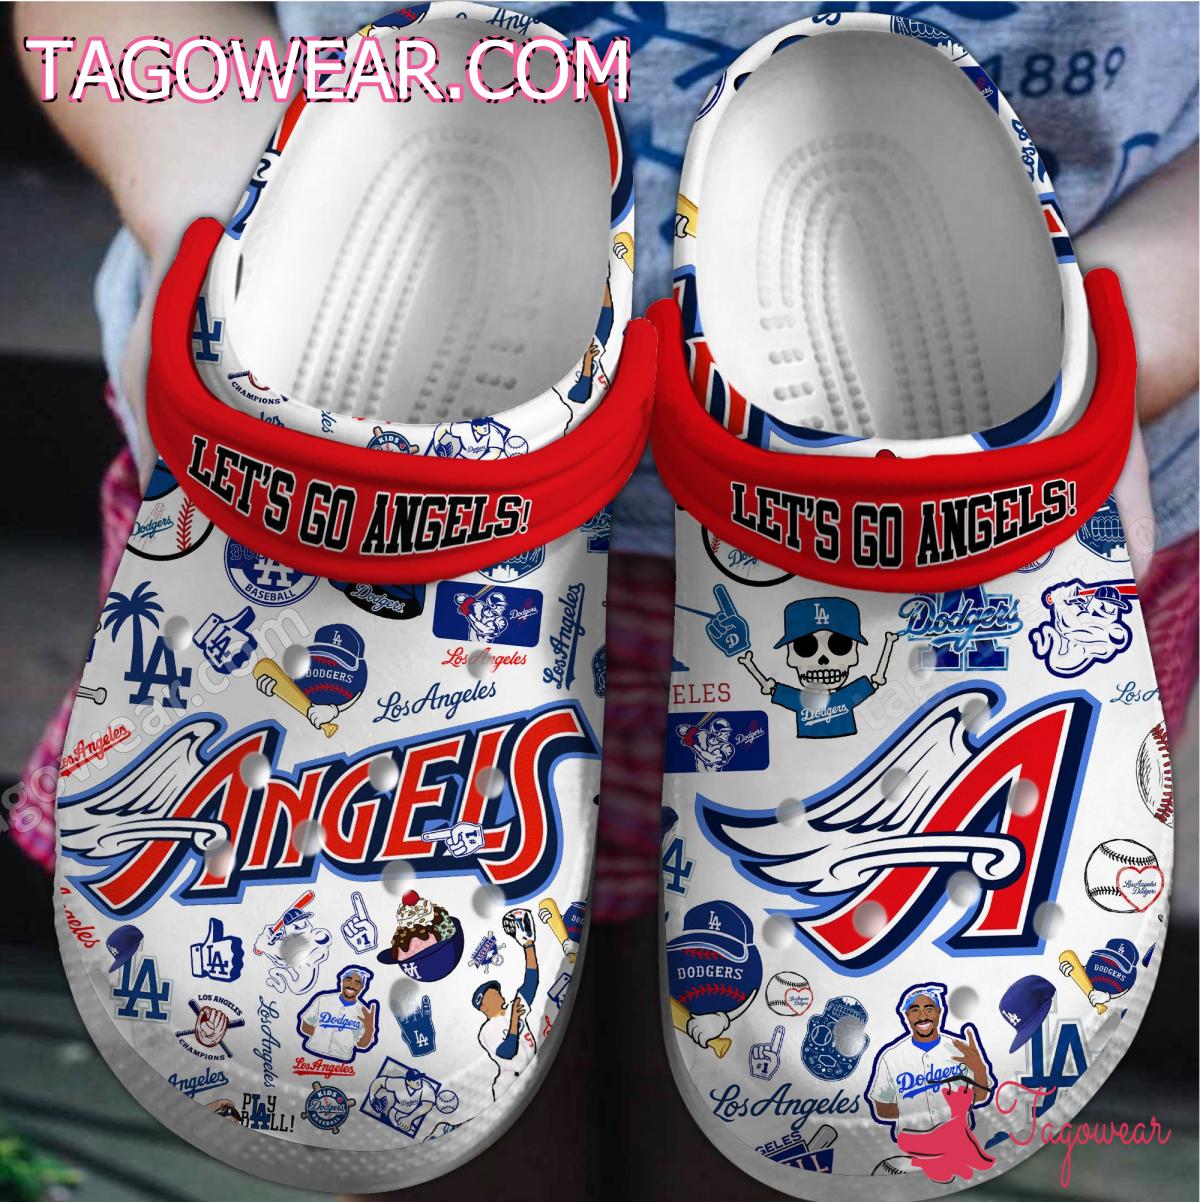 Los Angeles Angels Let's Go Angels Crocs Clogs